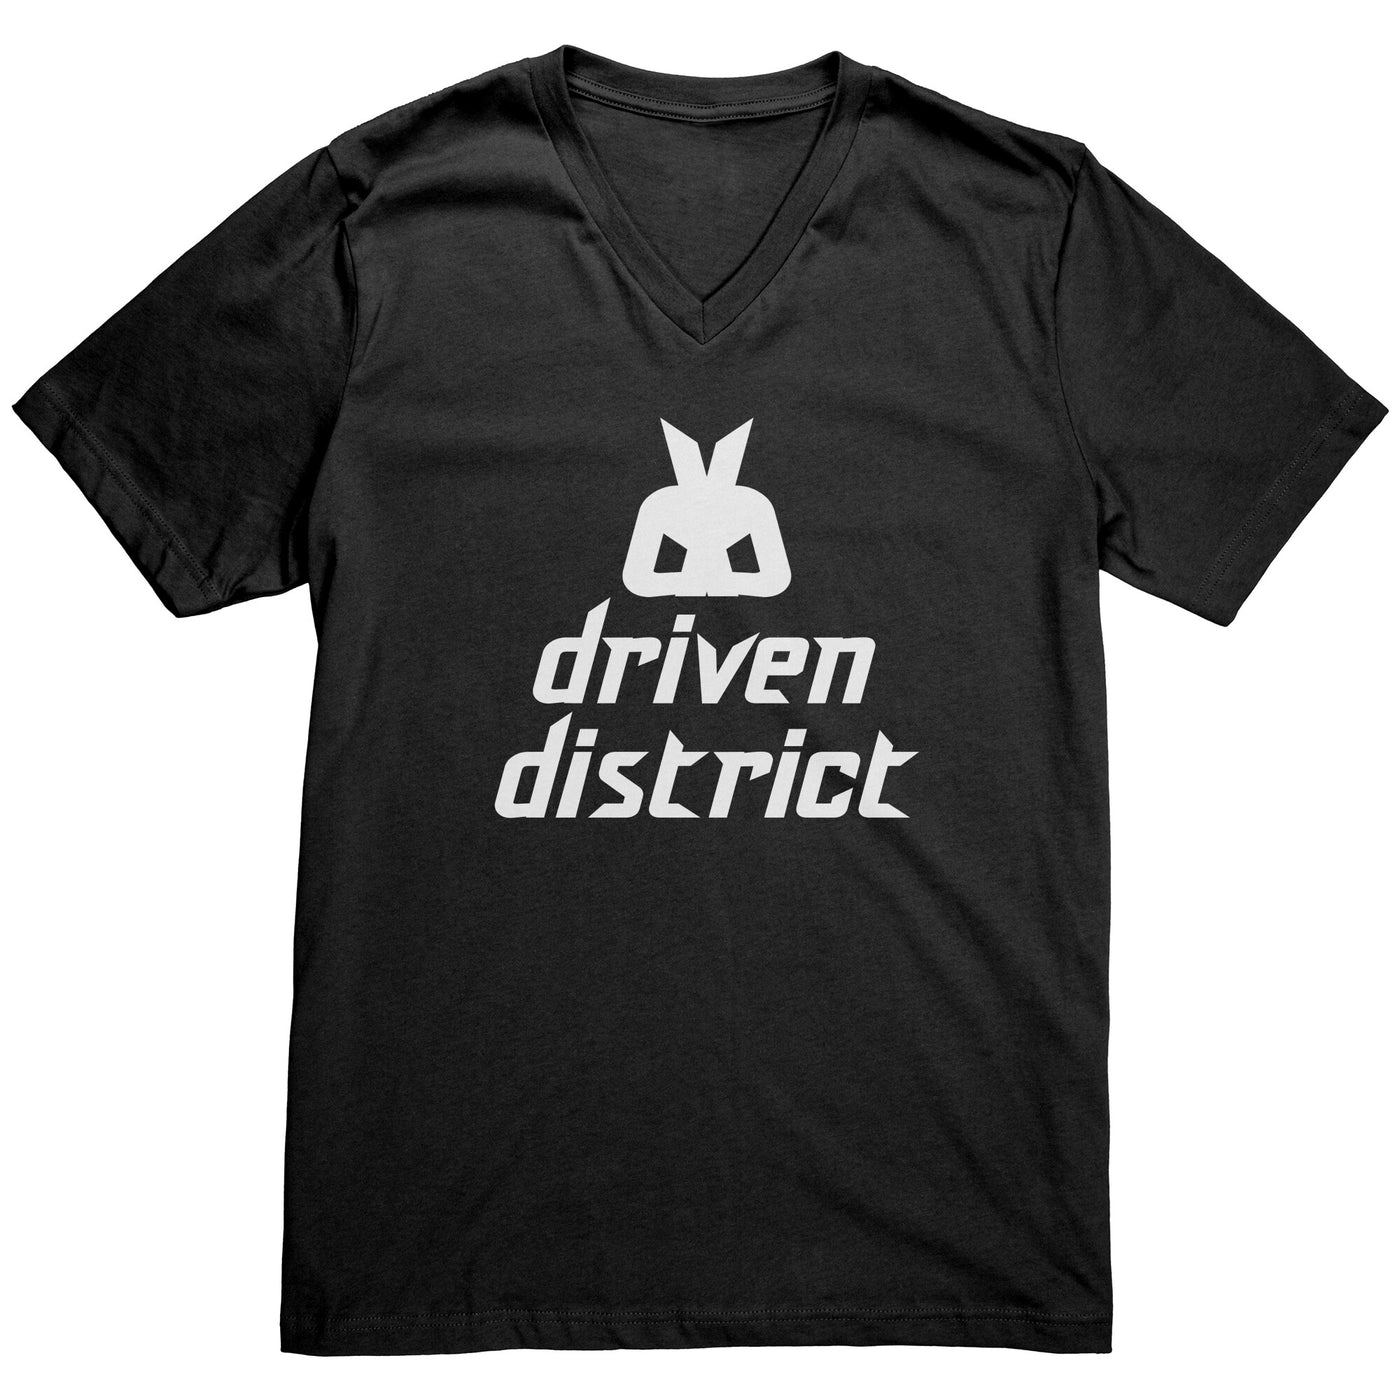 Driven District Test